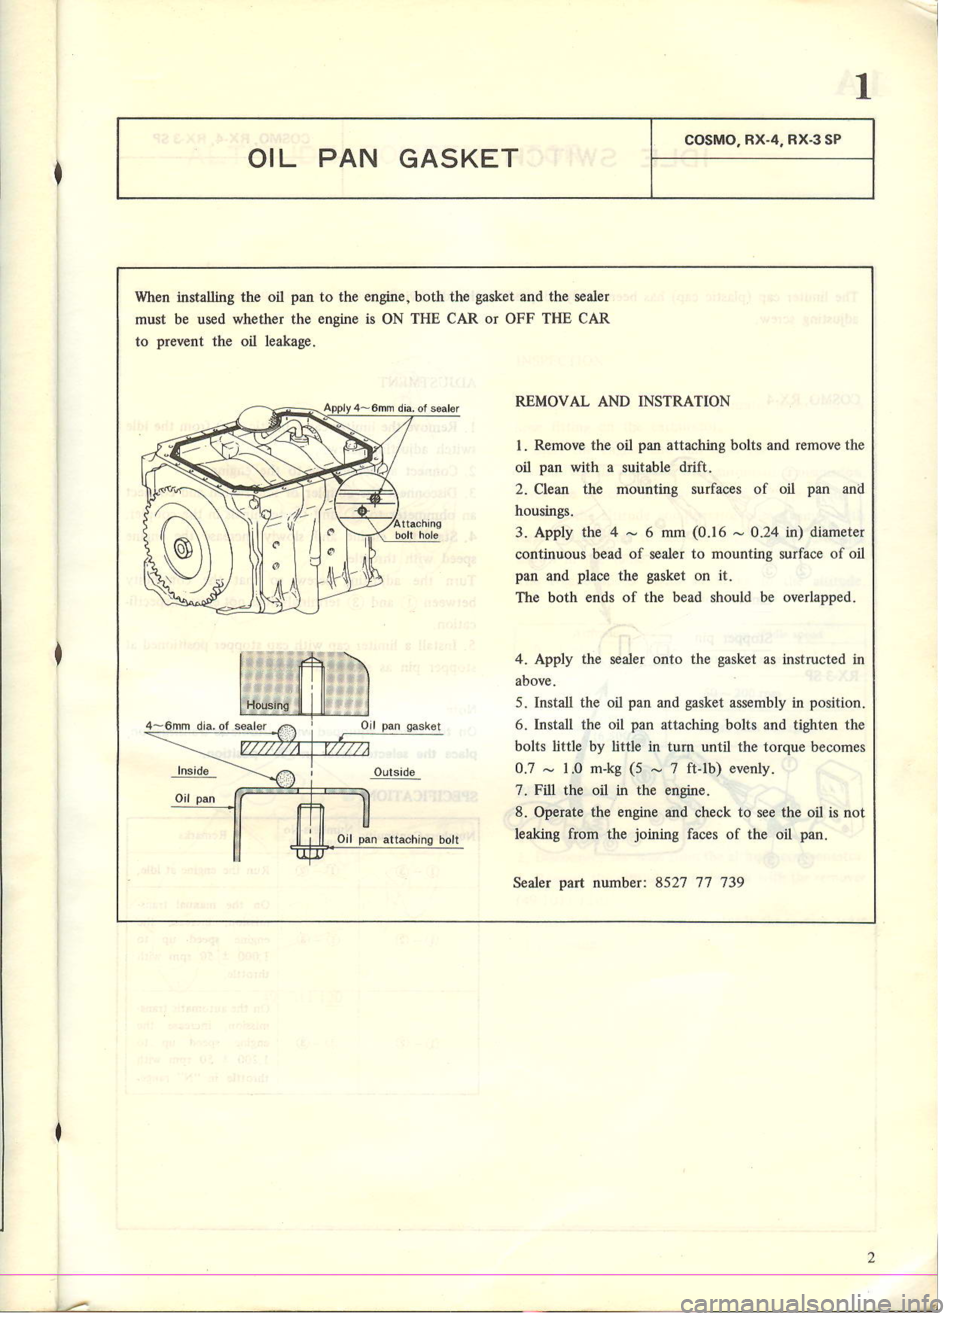 MAZDA COSMO 1978  Service Highlights Manual 